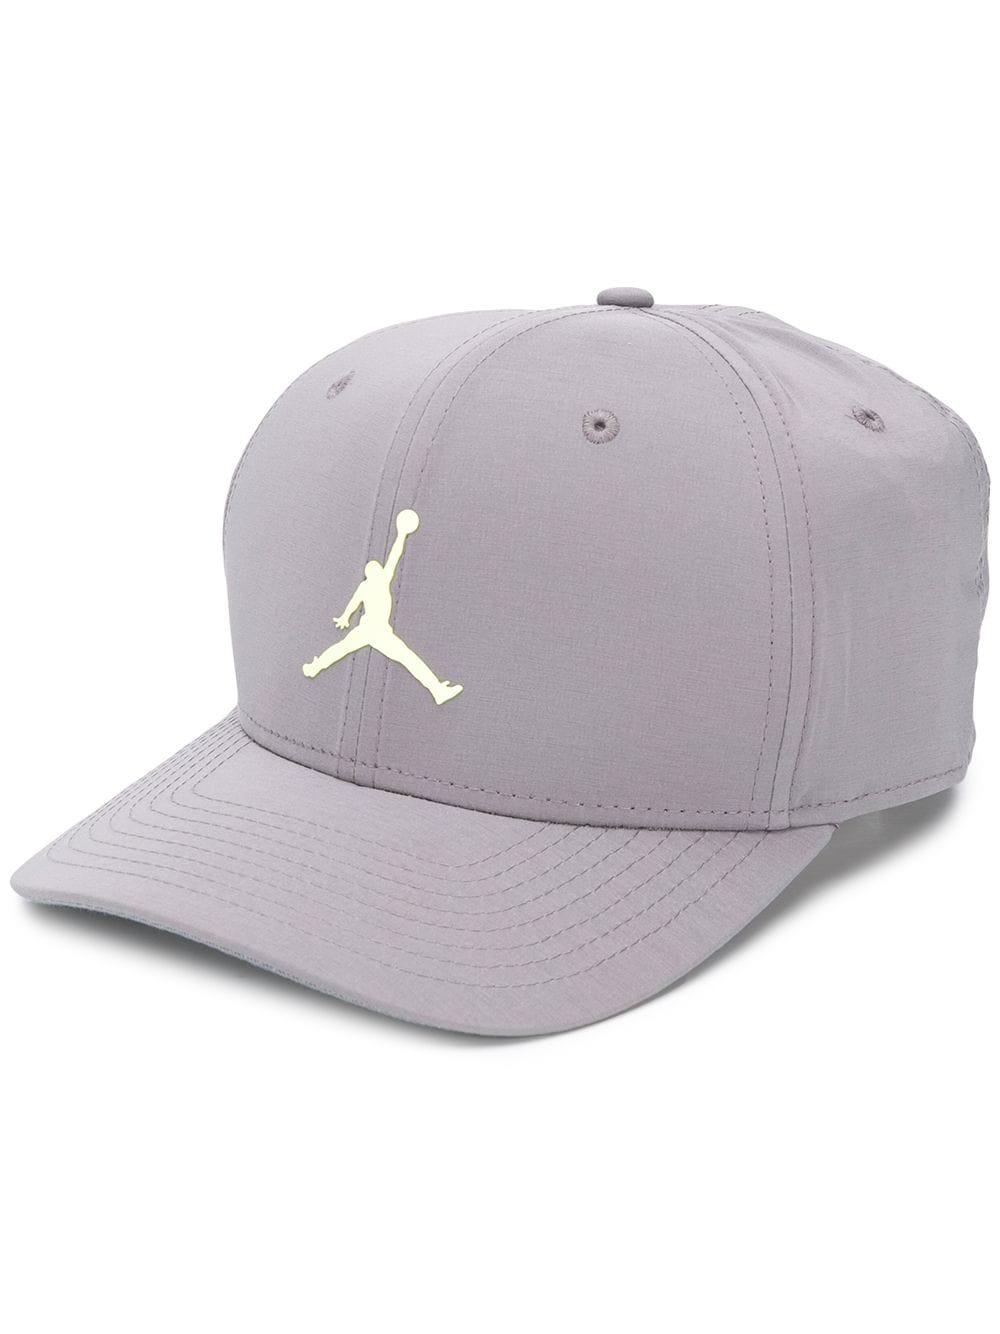 Nike Cotton Jordan Cap in Grey (Gray) for Men - Lyst